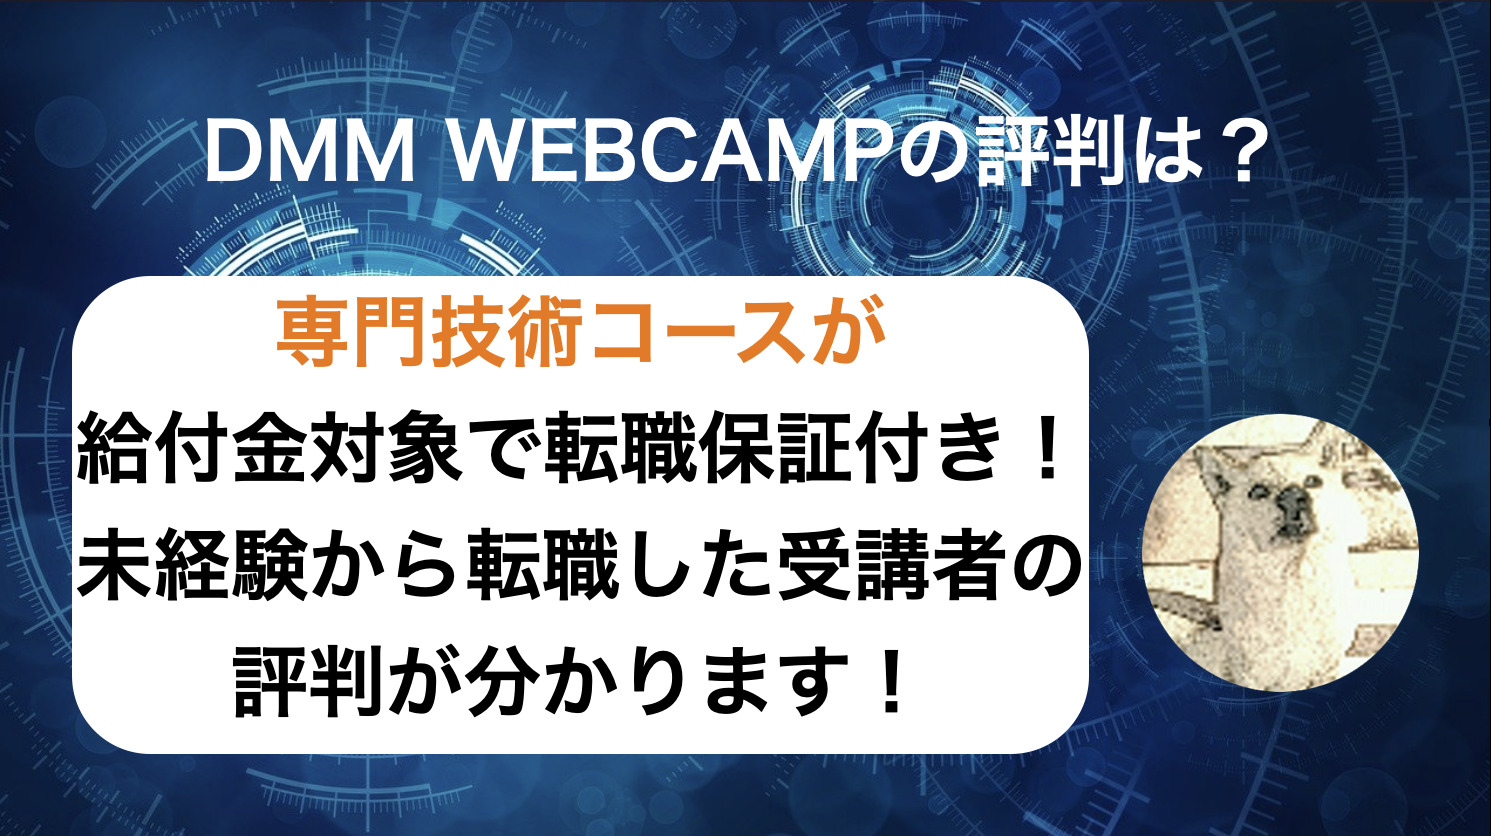 dmmwebcamp-review